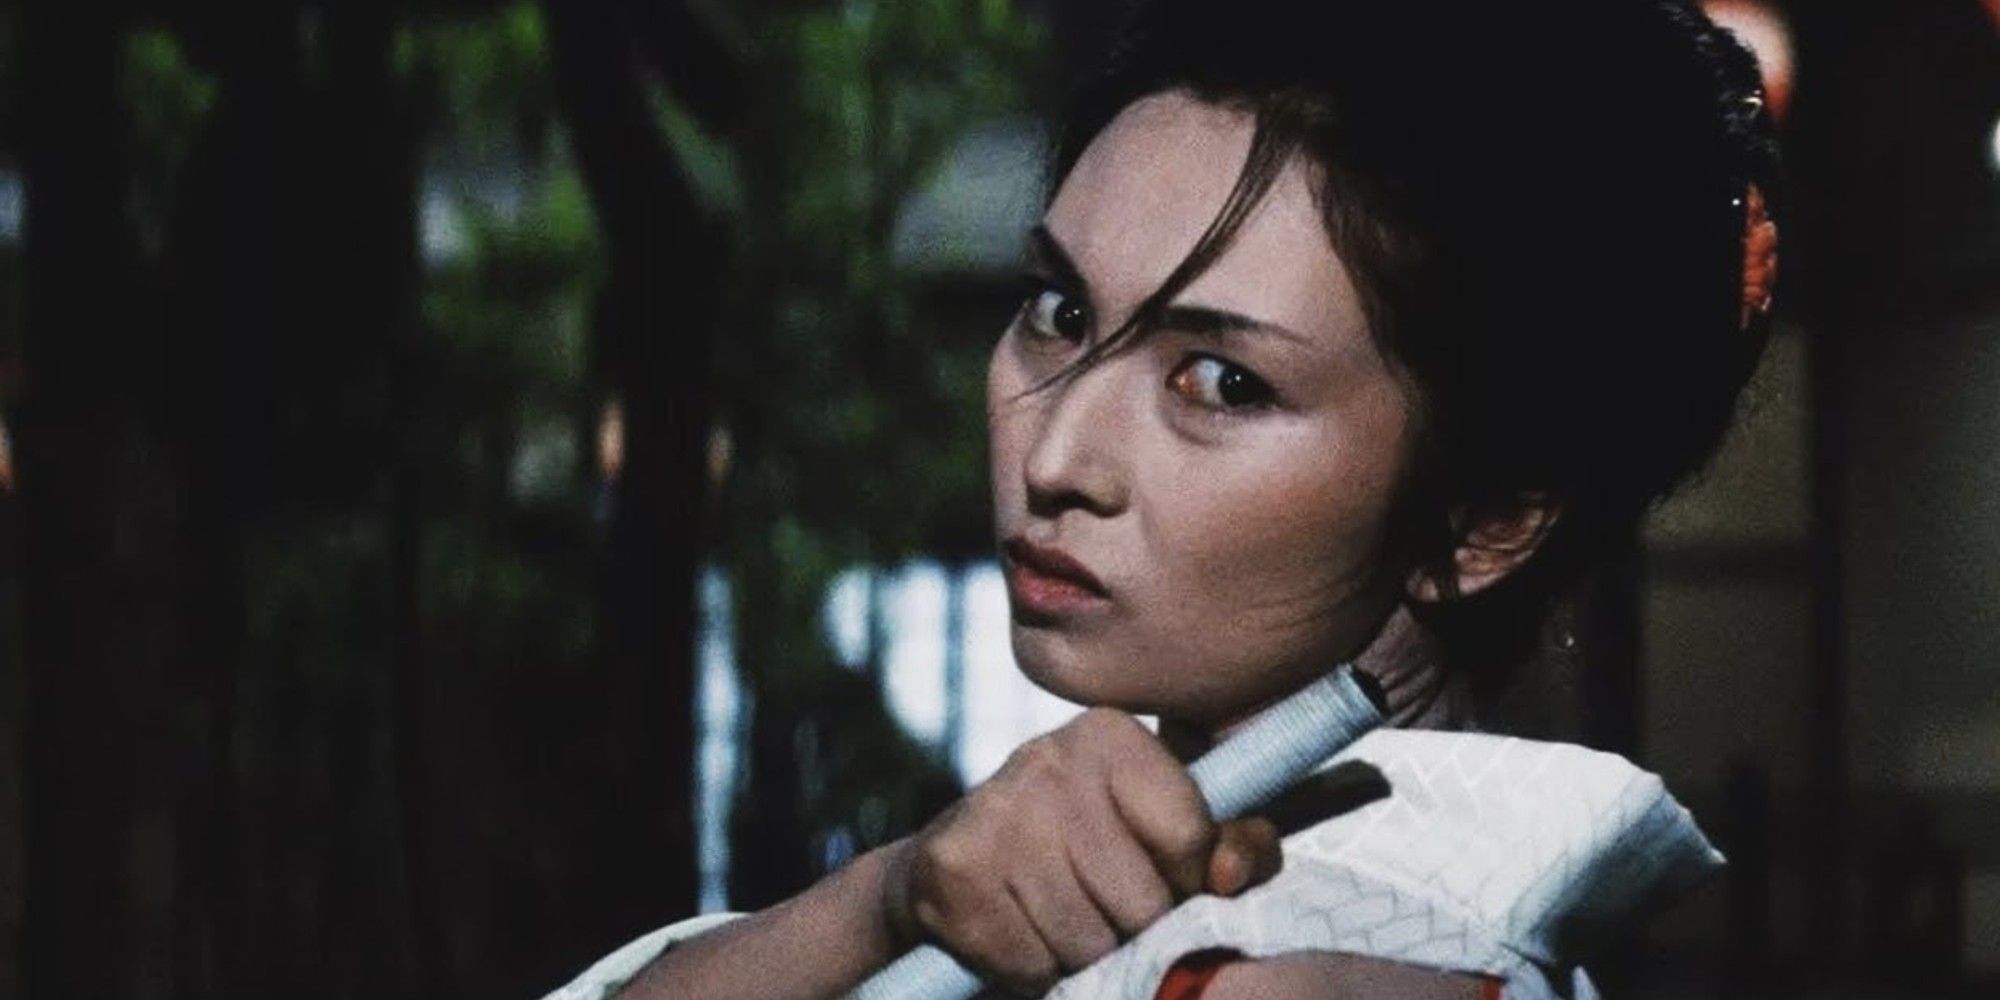 Meiko Kaji as Yuki Kashima in 'Lady Snowblood'